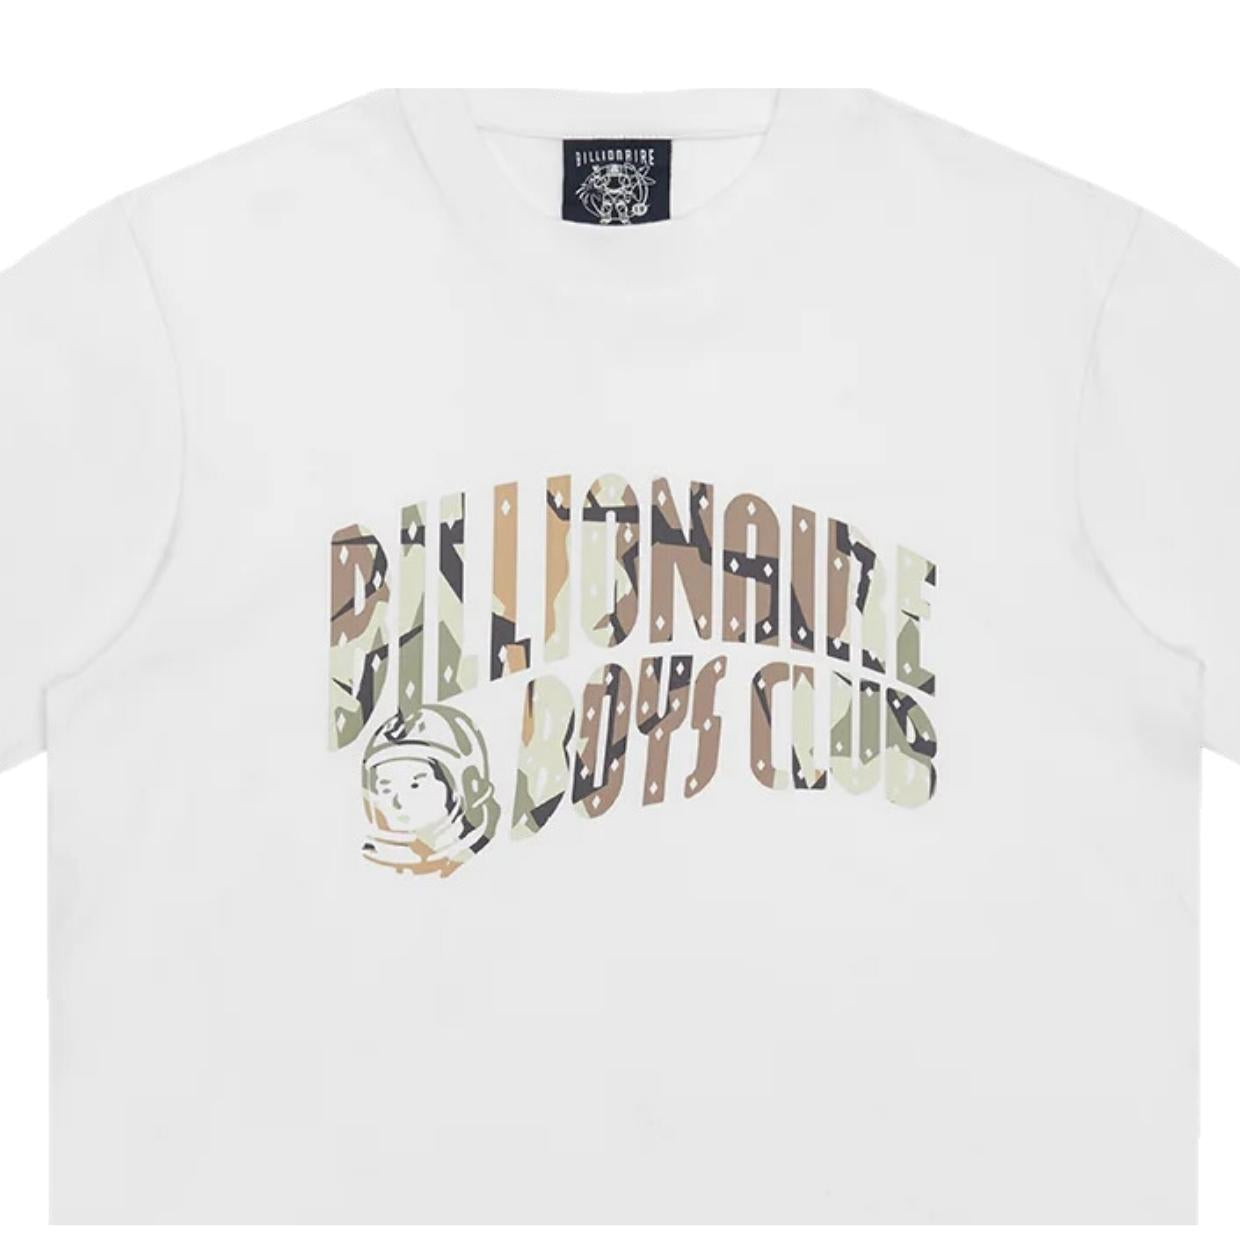 Billionaire Boys Club Camo Arch Logo White T-Shirt